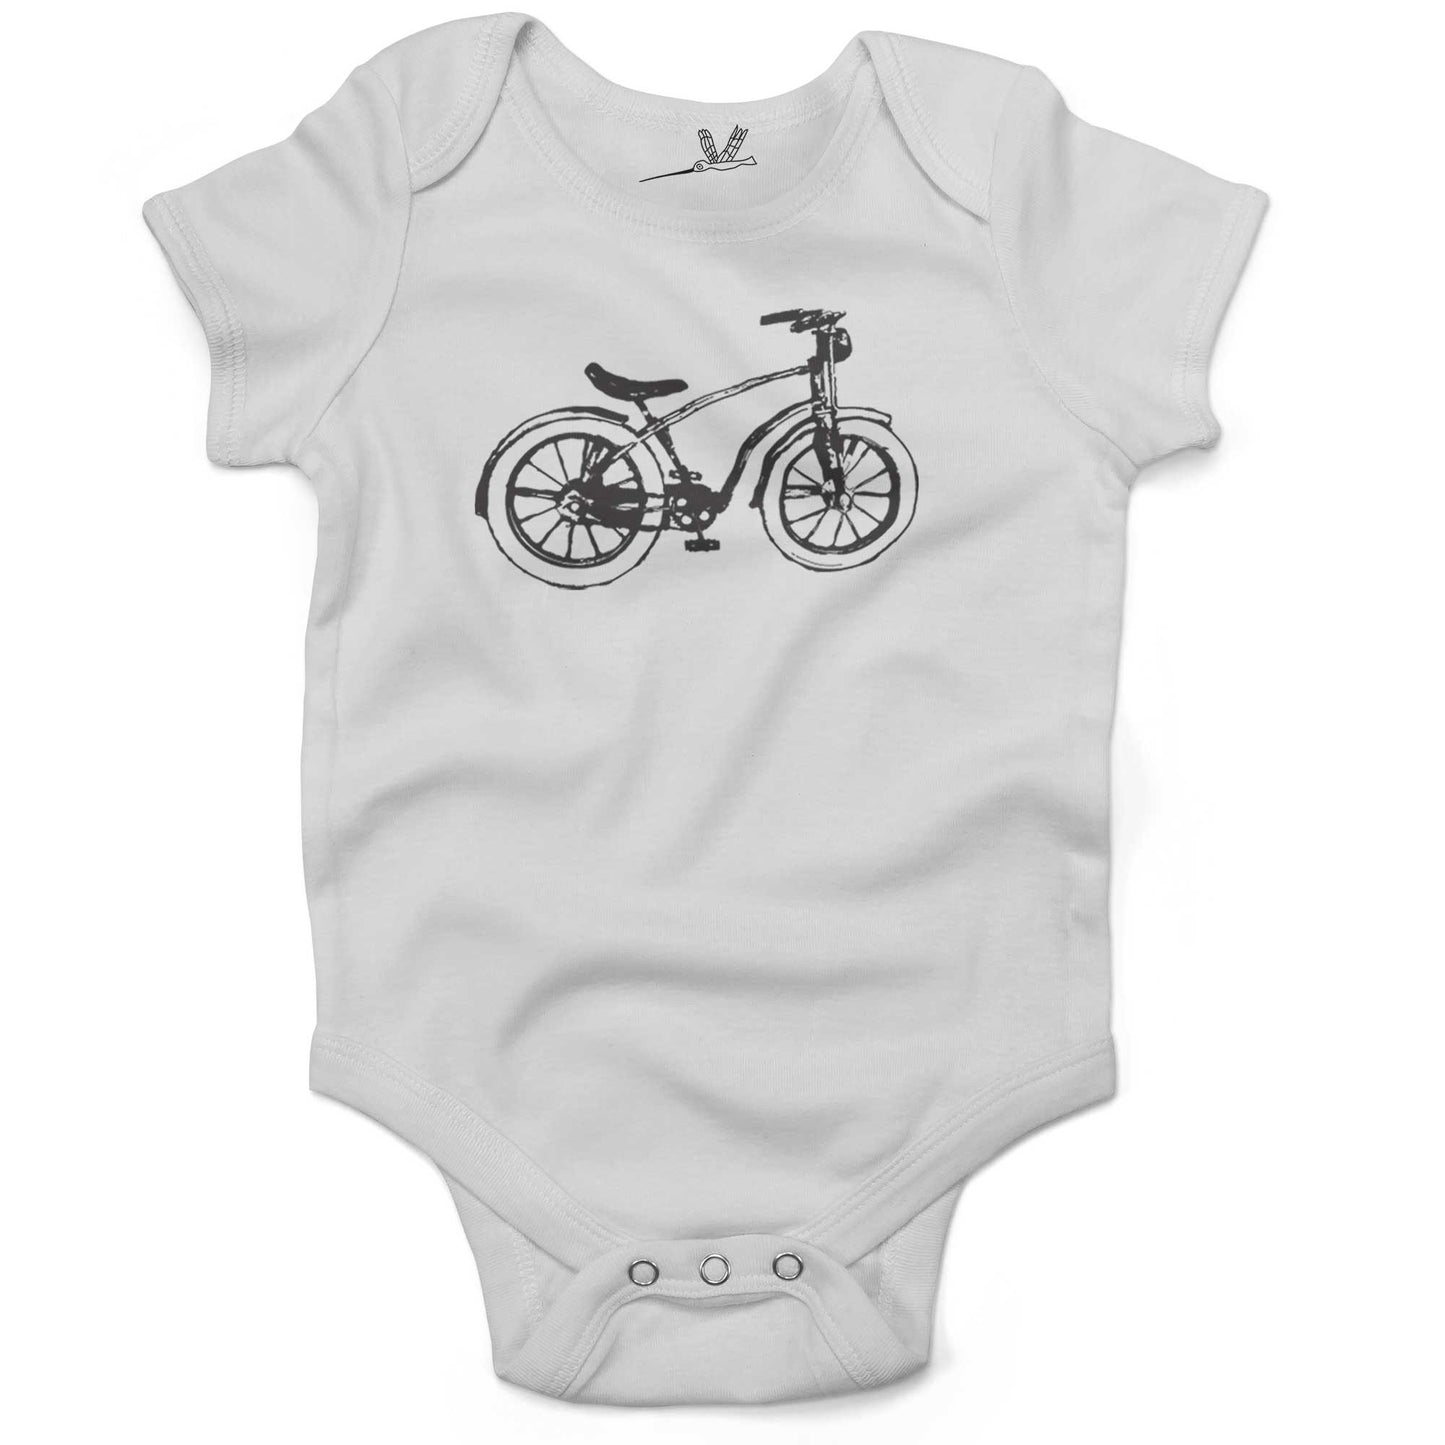 Vintage Bike Infant Bodysuit or Raglan Baby Tee-White-3-6 months